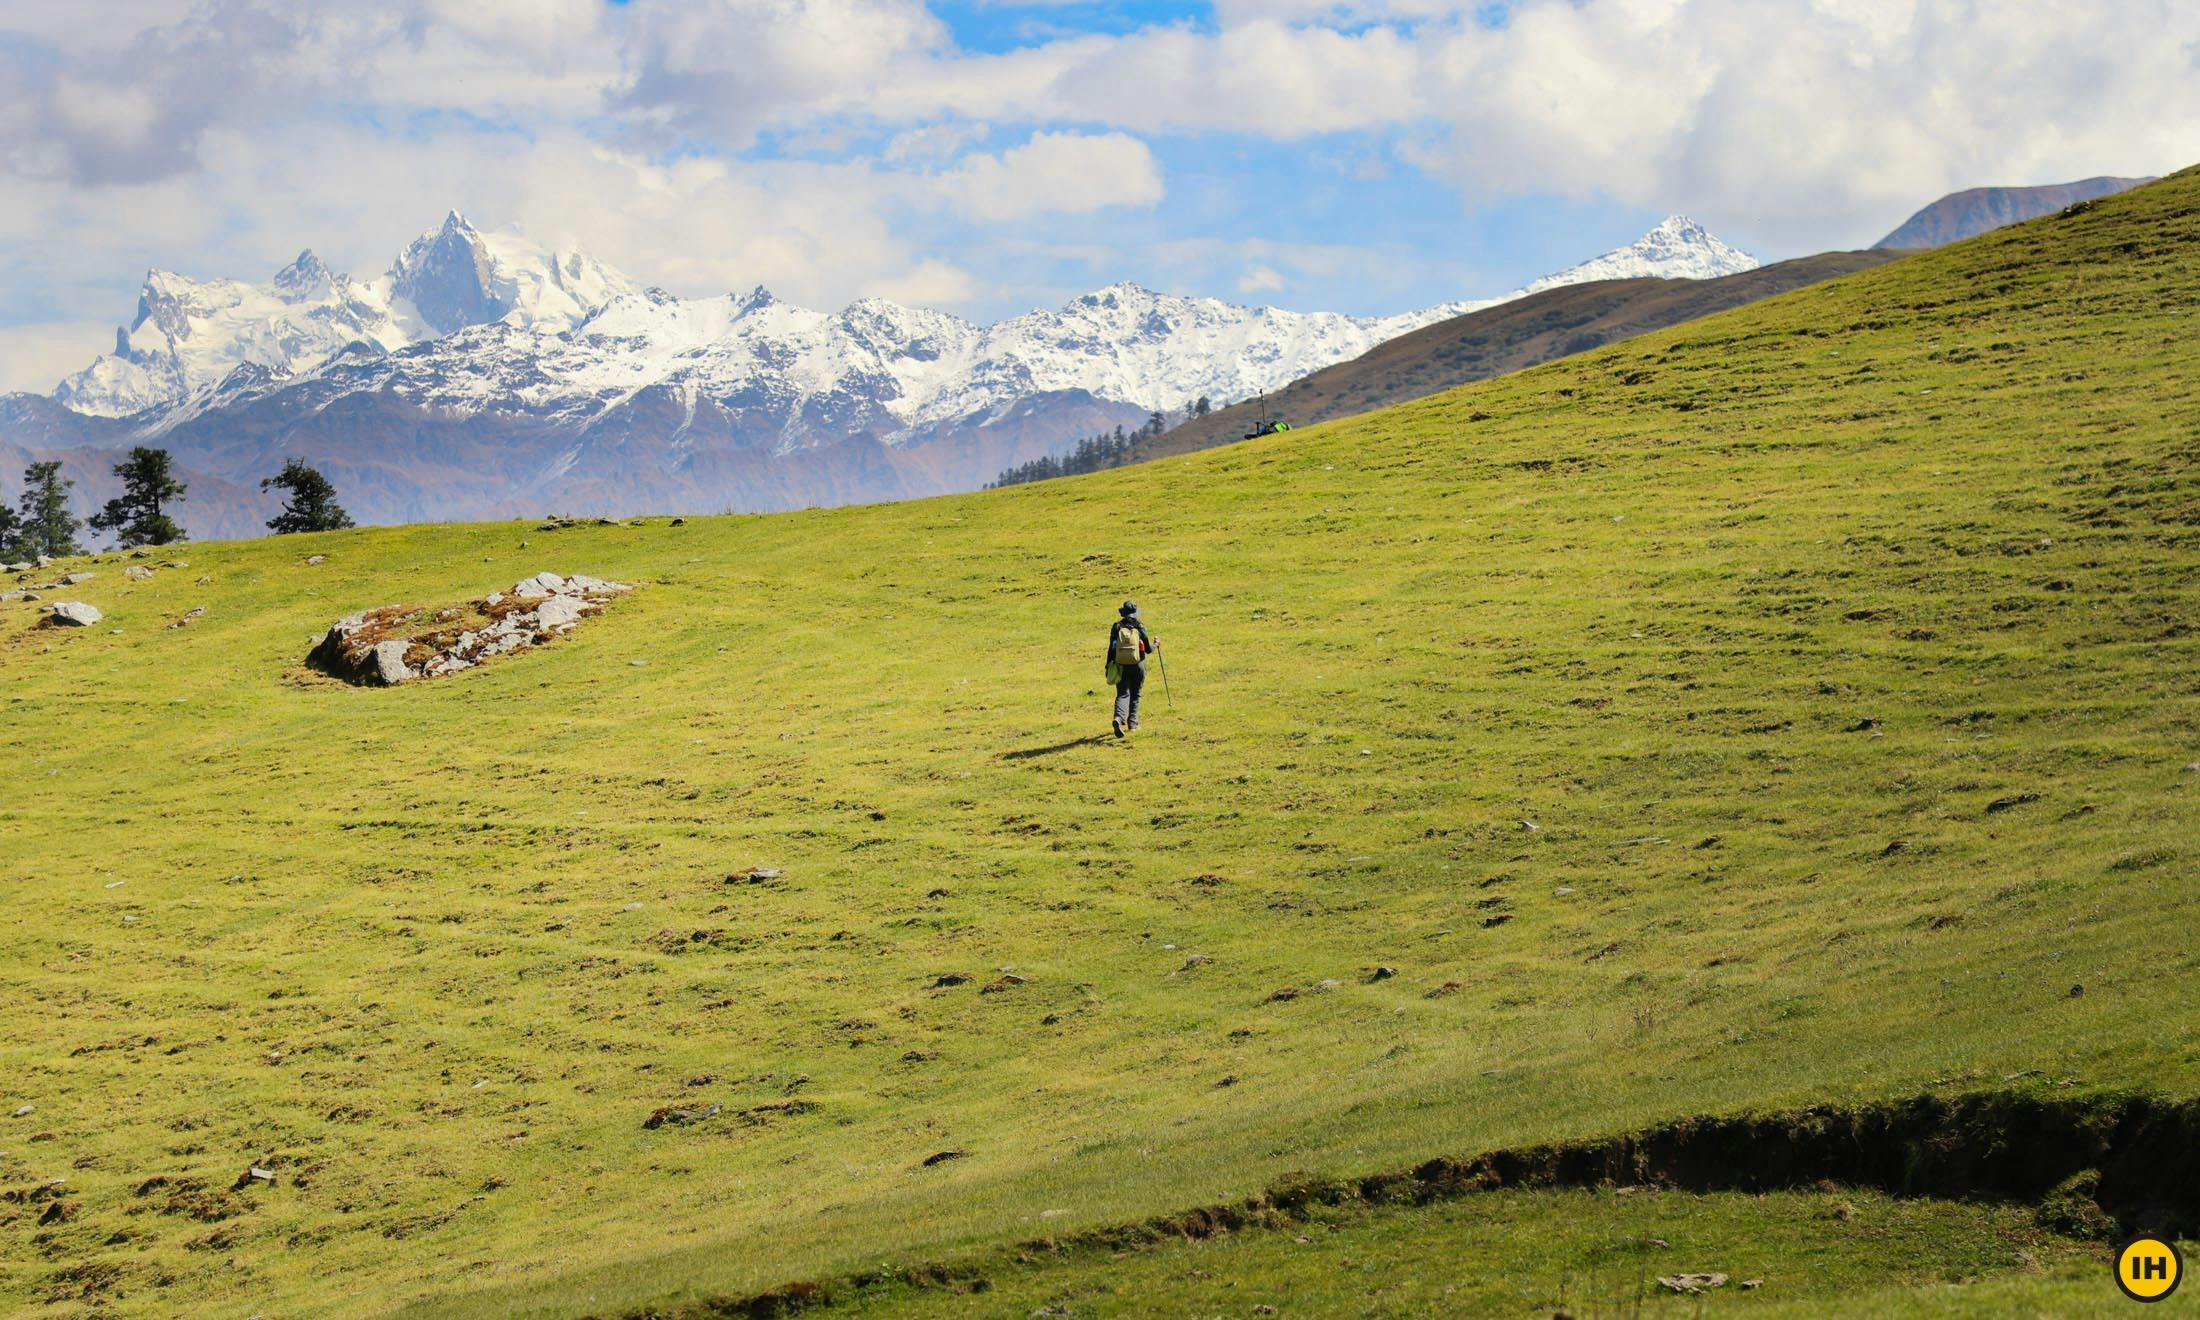 A trekker enjoying some alone time on the meadows of Phulara ridge trek 